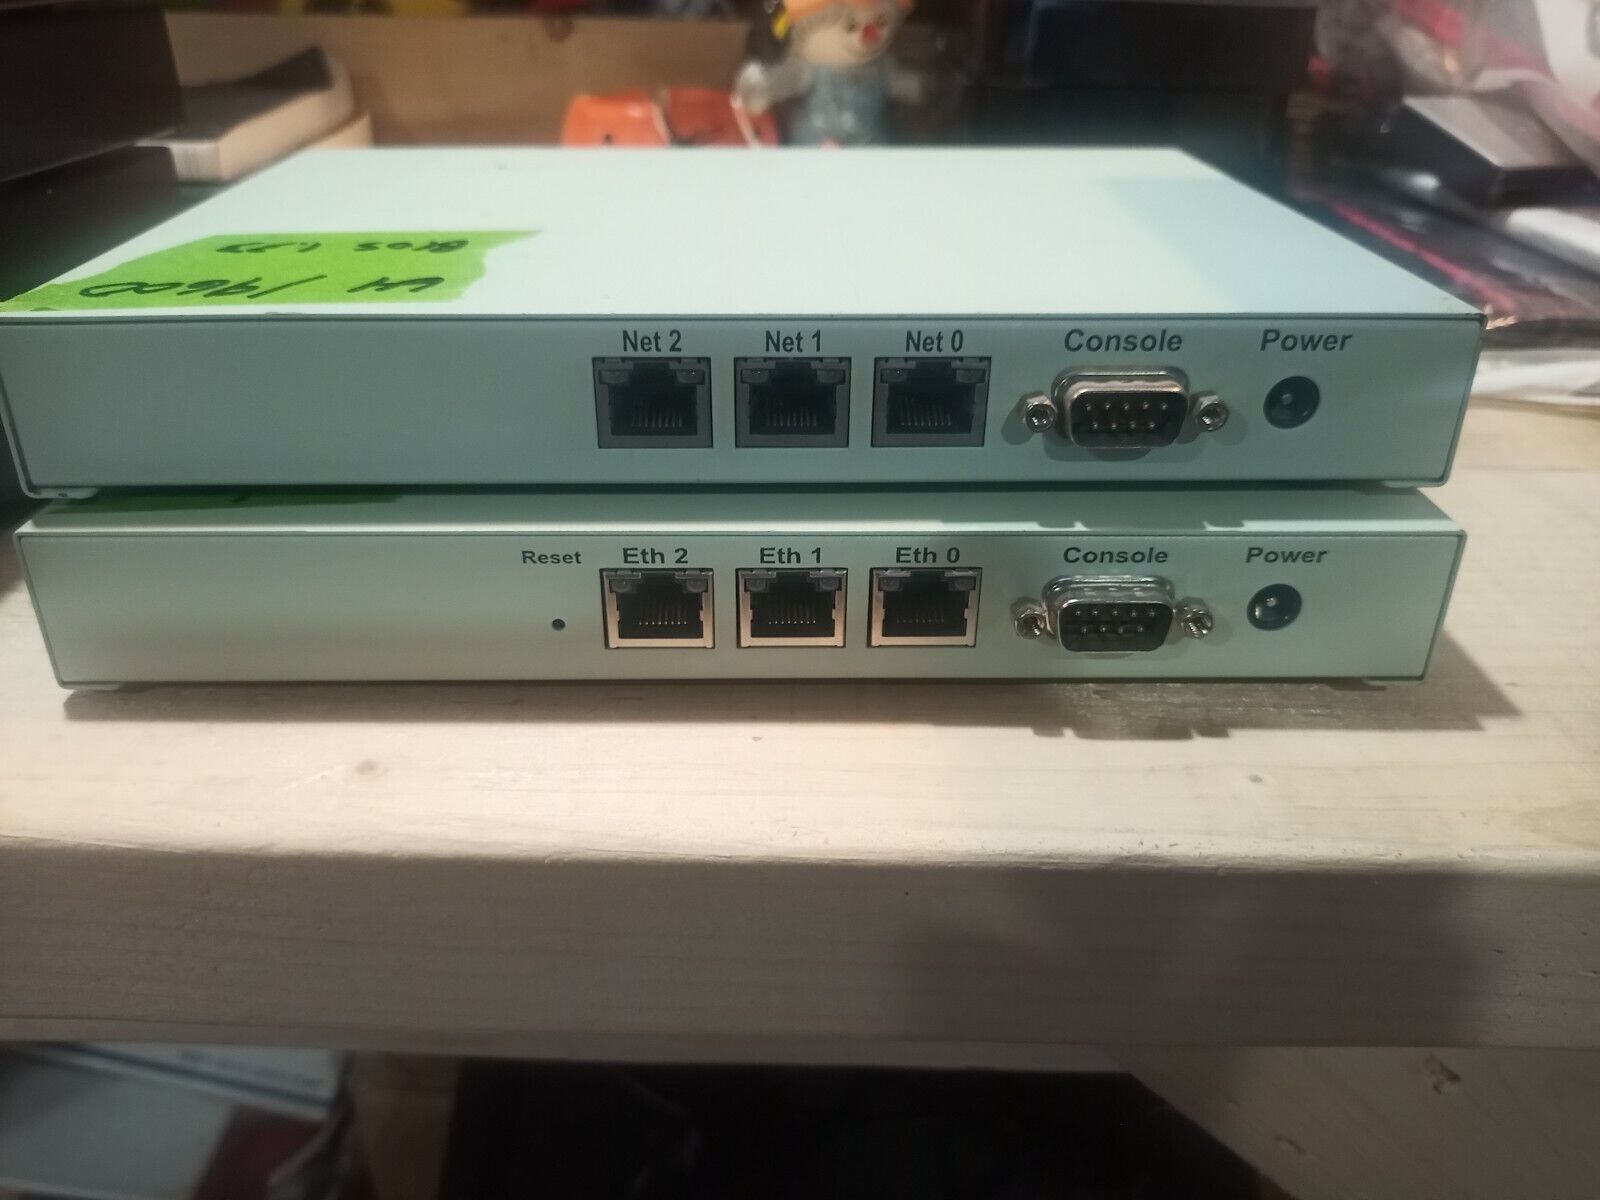 Soekris net4501 Embedded Computer PC Firewall Network Appliance 64MB RAM TESTED